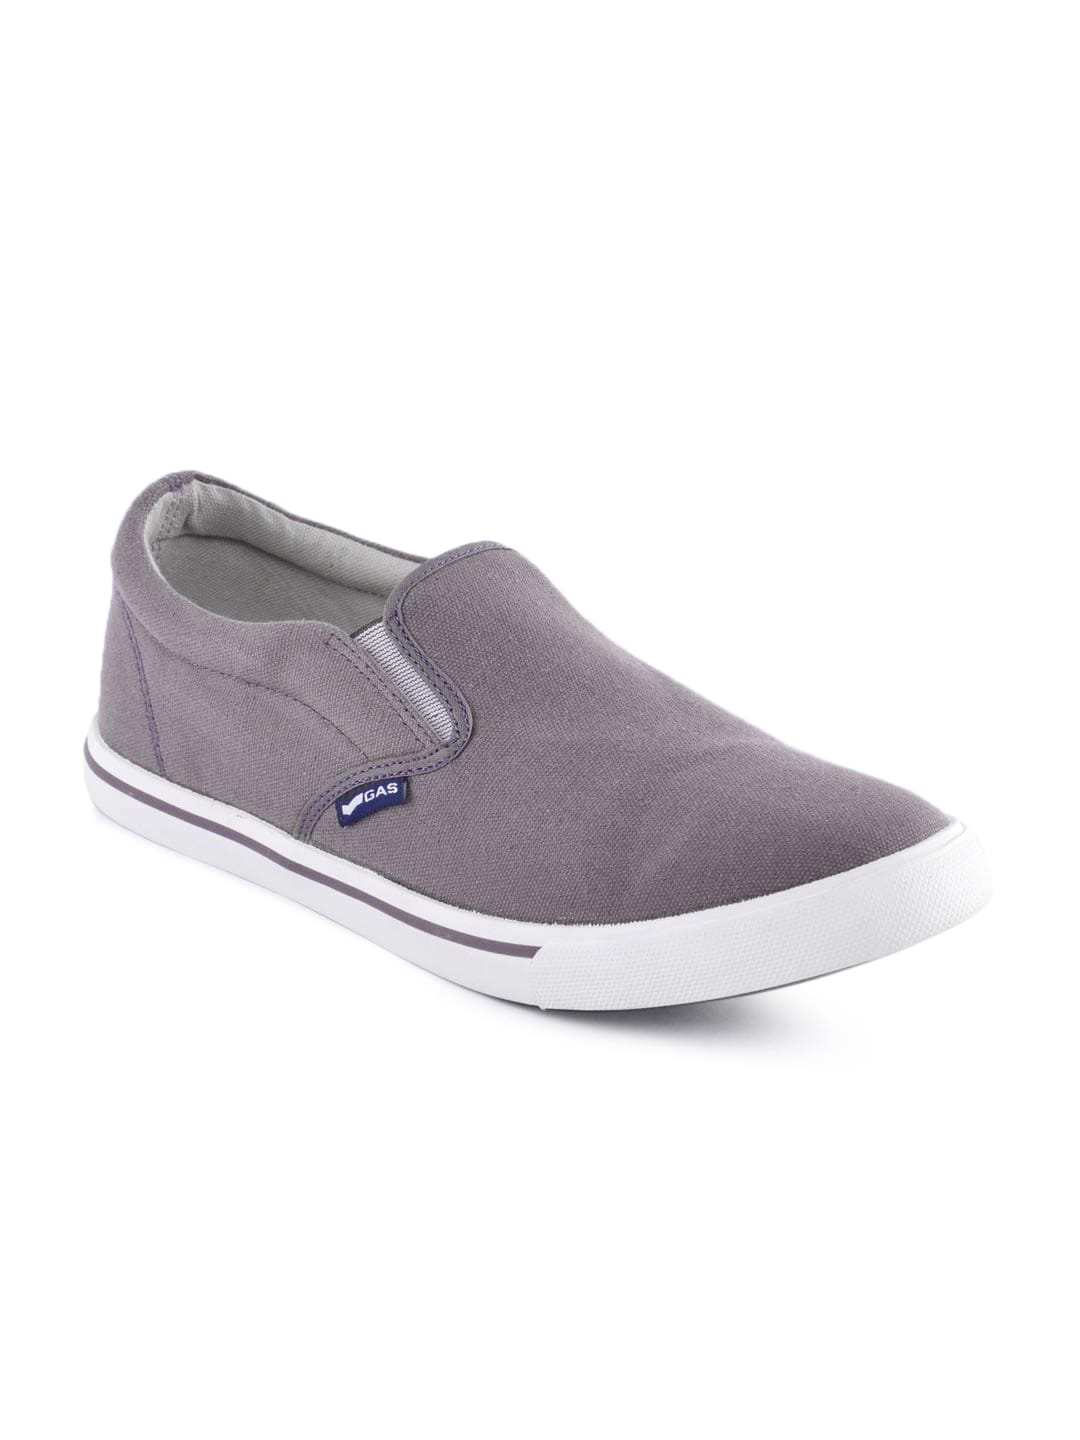 Gas Men Aishley Greyish Purple Casual Shoes